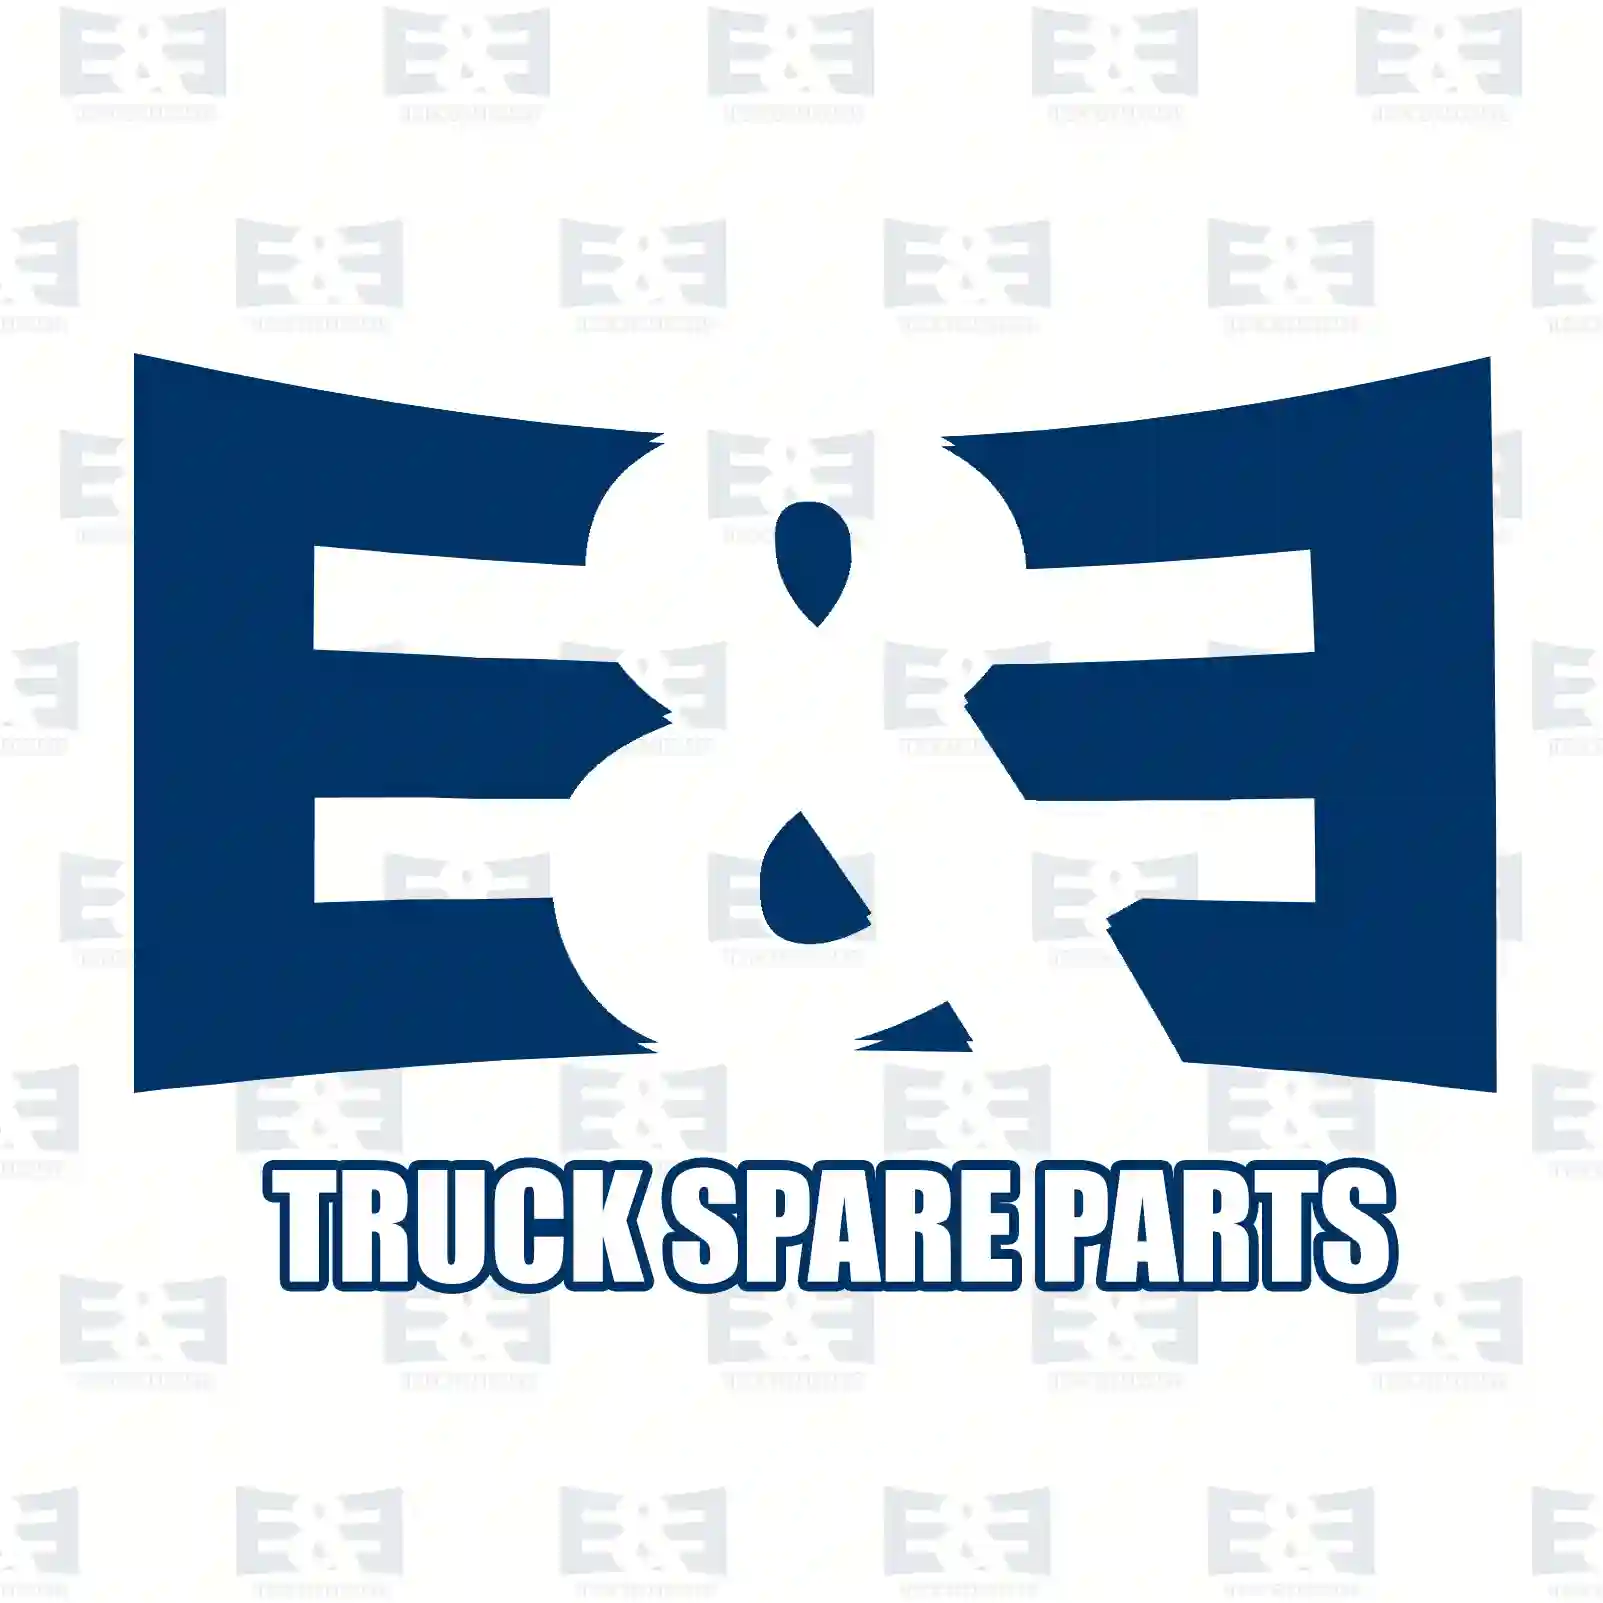 Extension tube, 2E2201523, 51981820050, 2V5121133A ||  2E2201523 E&E Truck Spare Parts | Truck Spare Parts, Auotomotive Spare Parts Extension tube, 2E2201523, 51981820050, 2V5121133A ||  2E2201523 E&E Truck Spare Parts | Truck Spare Parts, Auotomotive Spare Parts